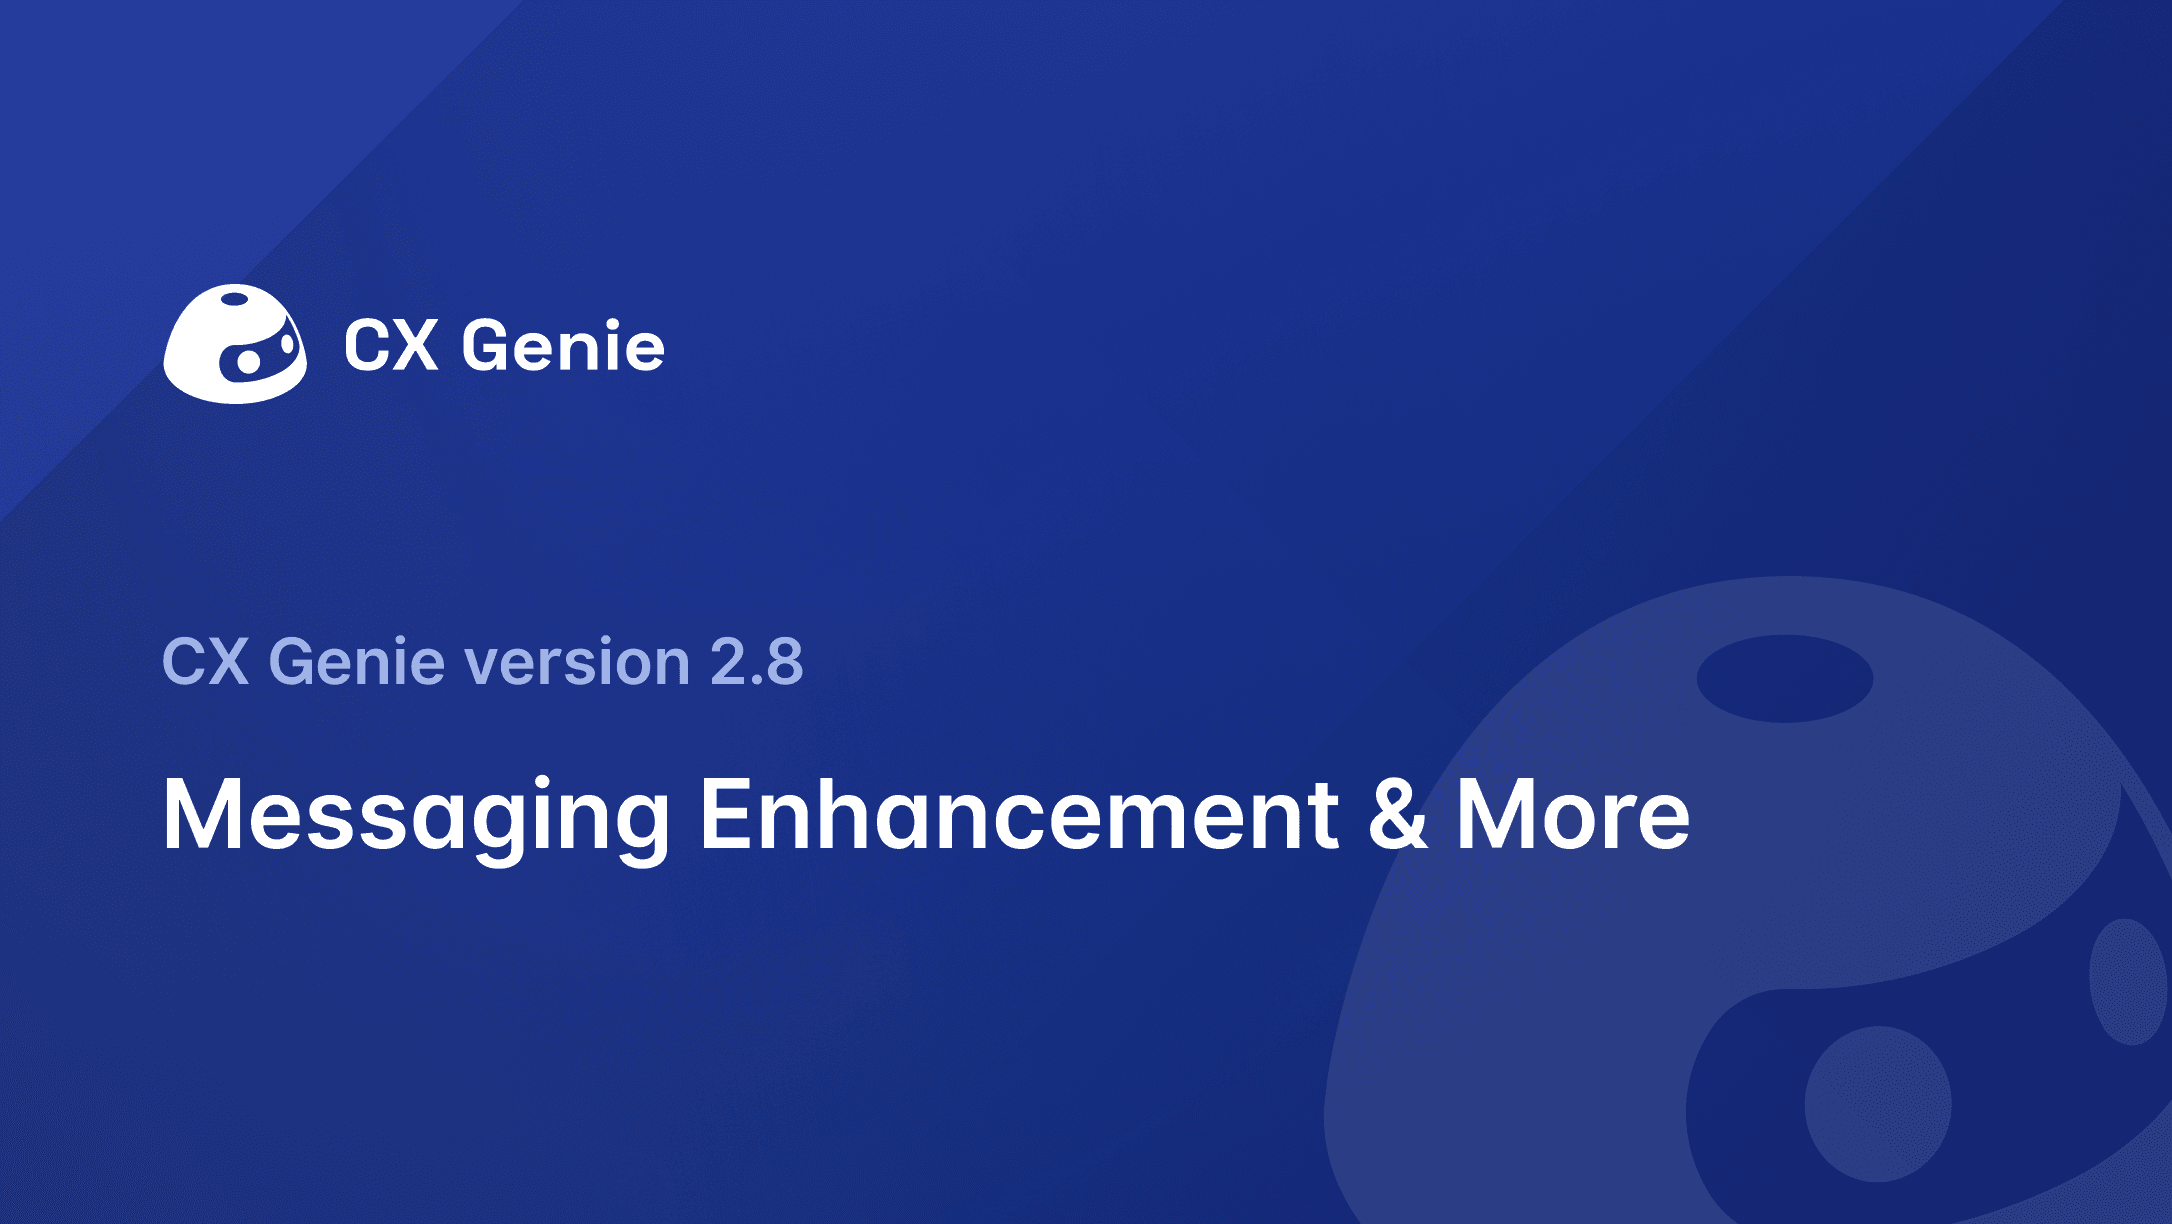 CX Genie Version 2.8: Messaging Enhancement & More